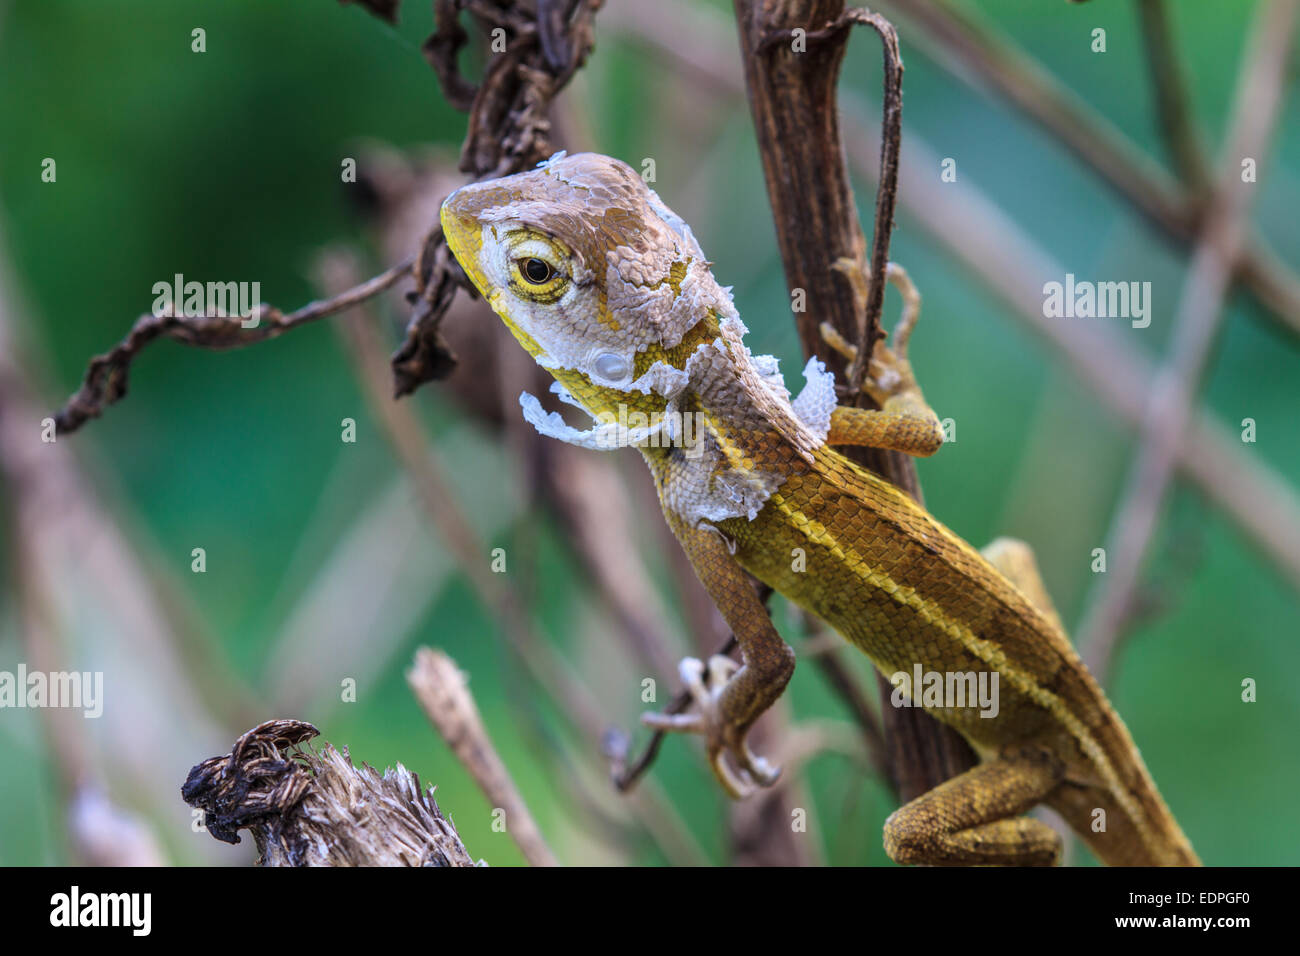 Green Lizard  changing skin resting on wood horizontal Stock Photo